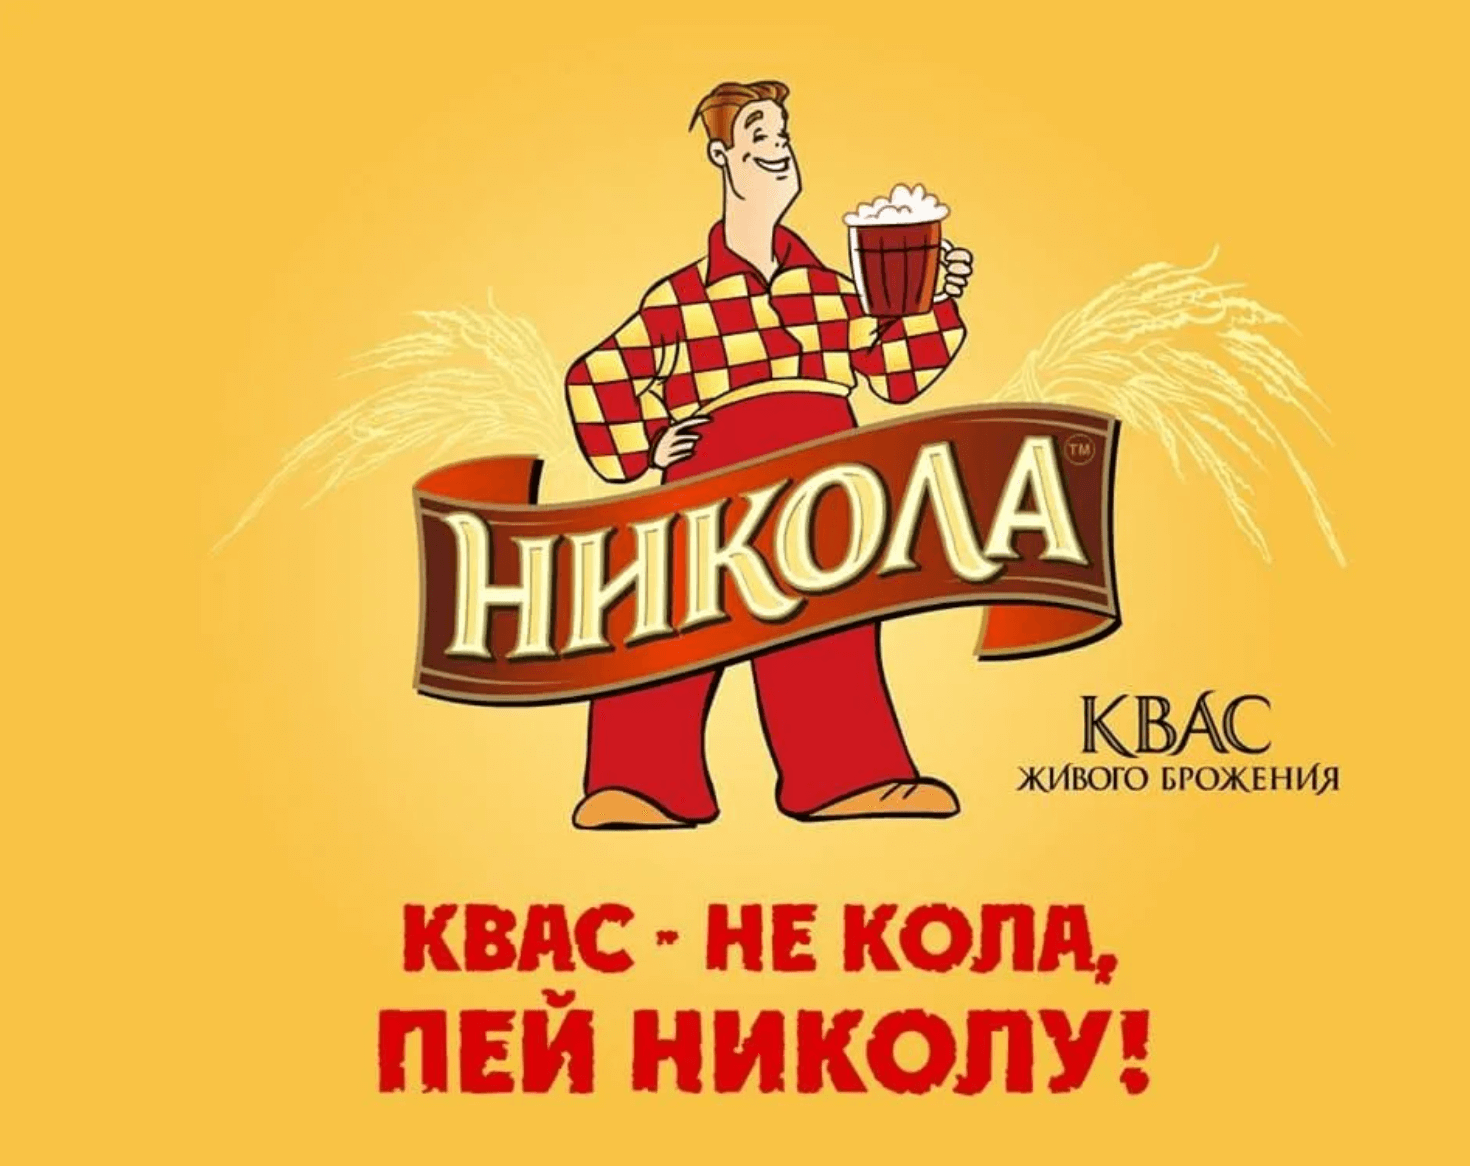 Реклама кваса «Никола» со слоганом «Квас — не кола, пей Николу!»